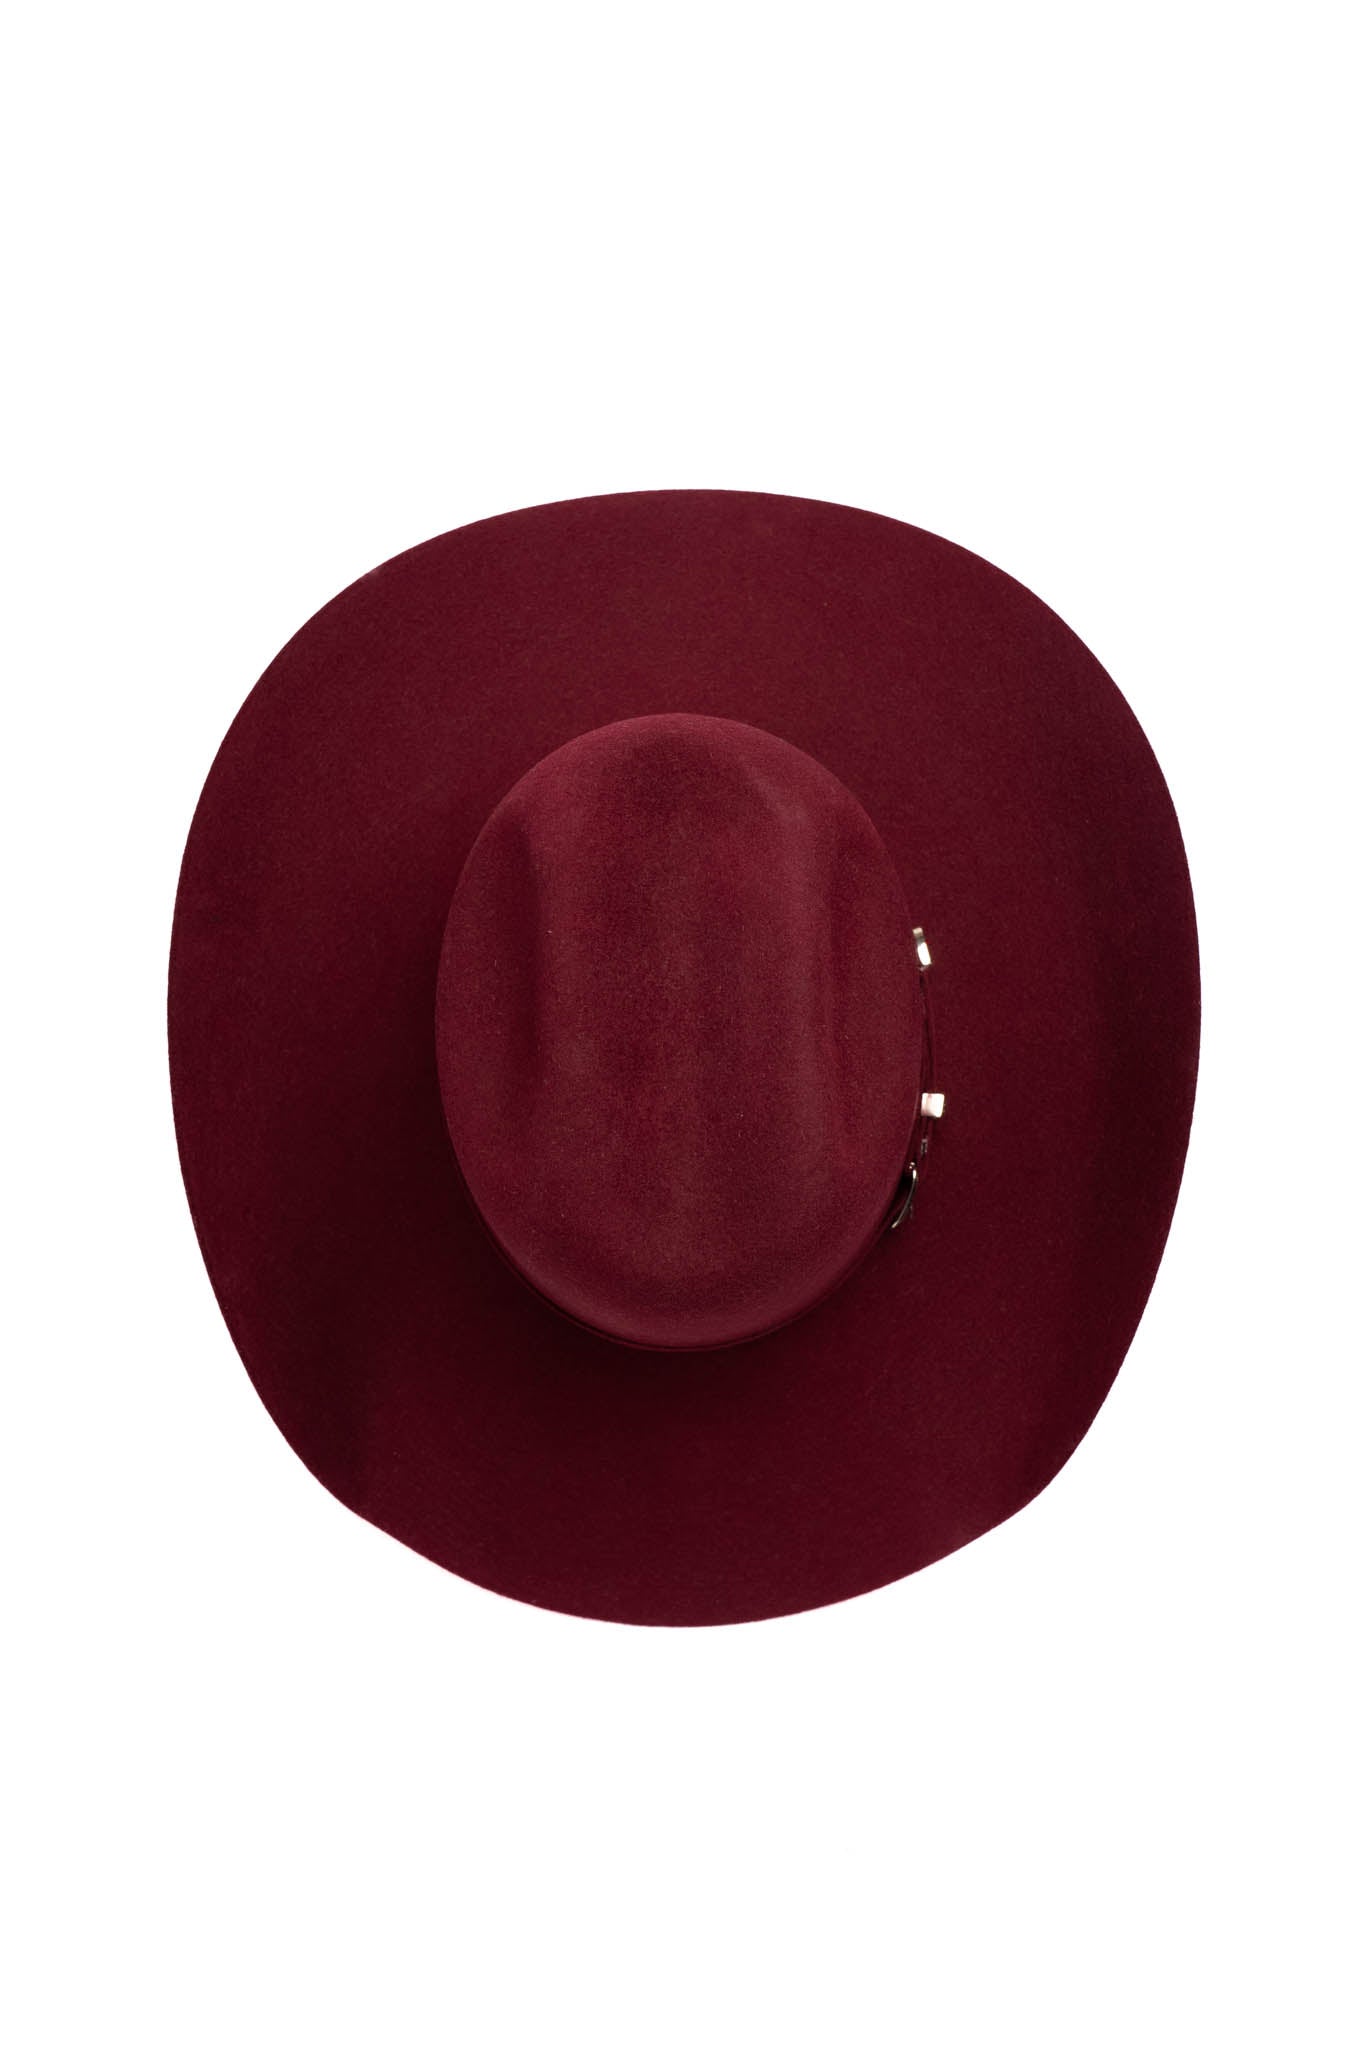 Damian 6X Tall Crown Felt Hat Limited Edition